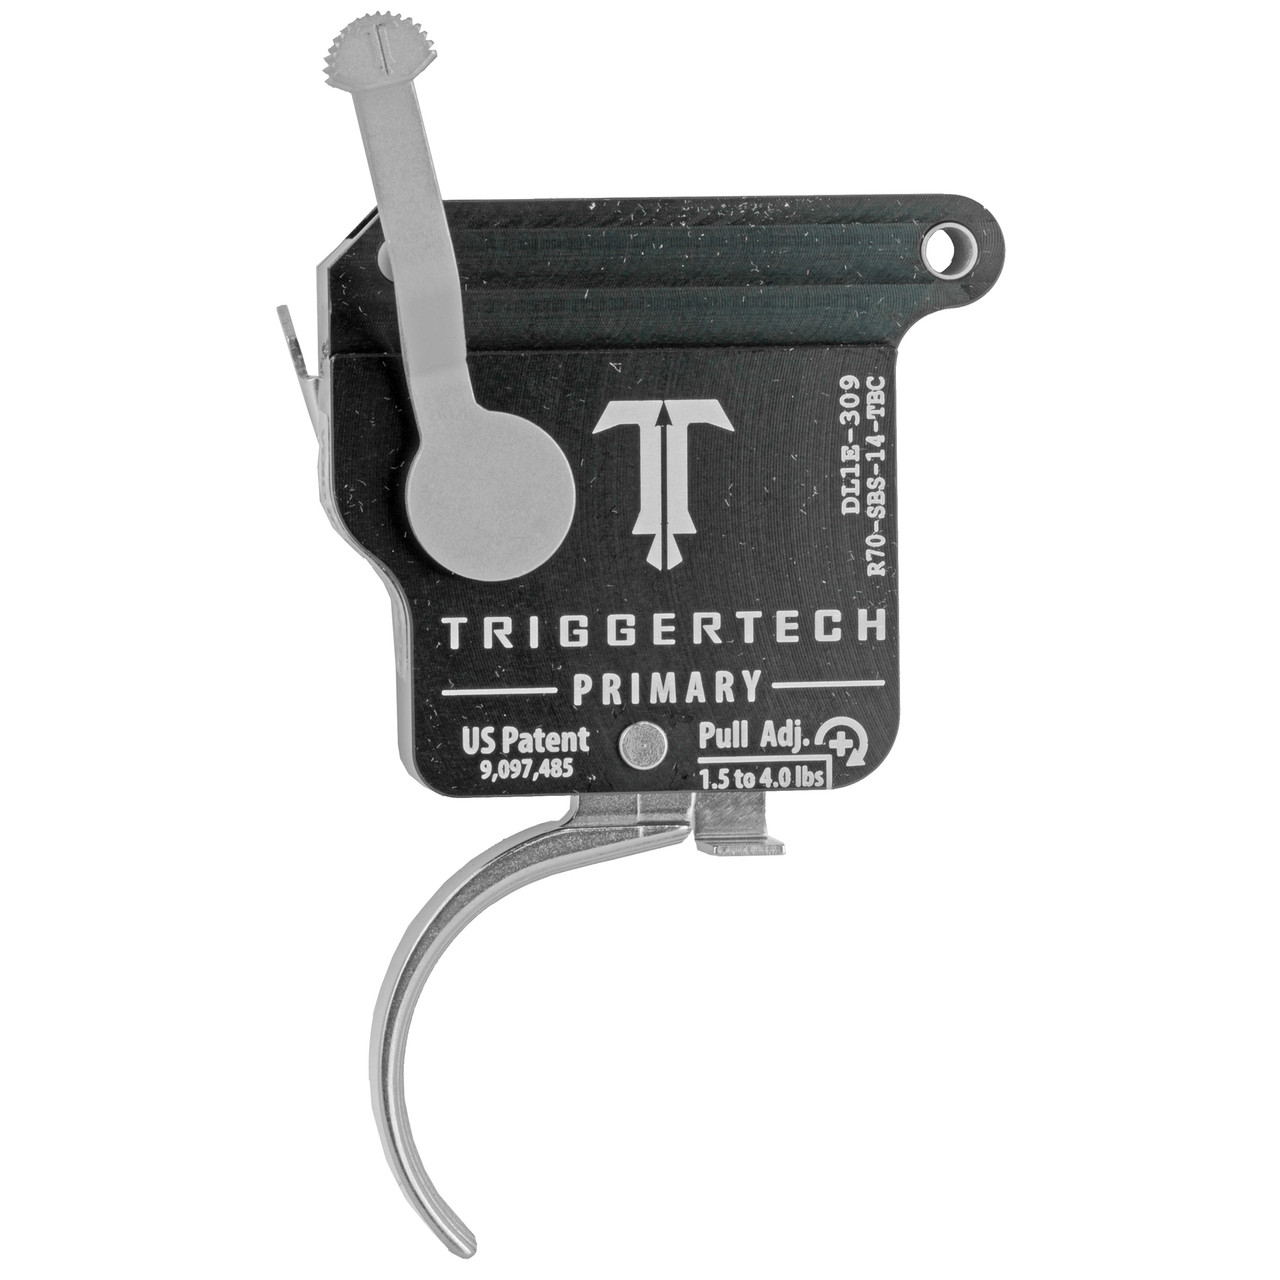 TriggerTech R70-SBS-14-TBC R700 Primry Crvd Rh Blt